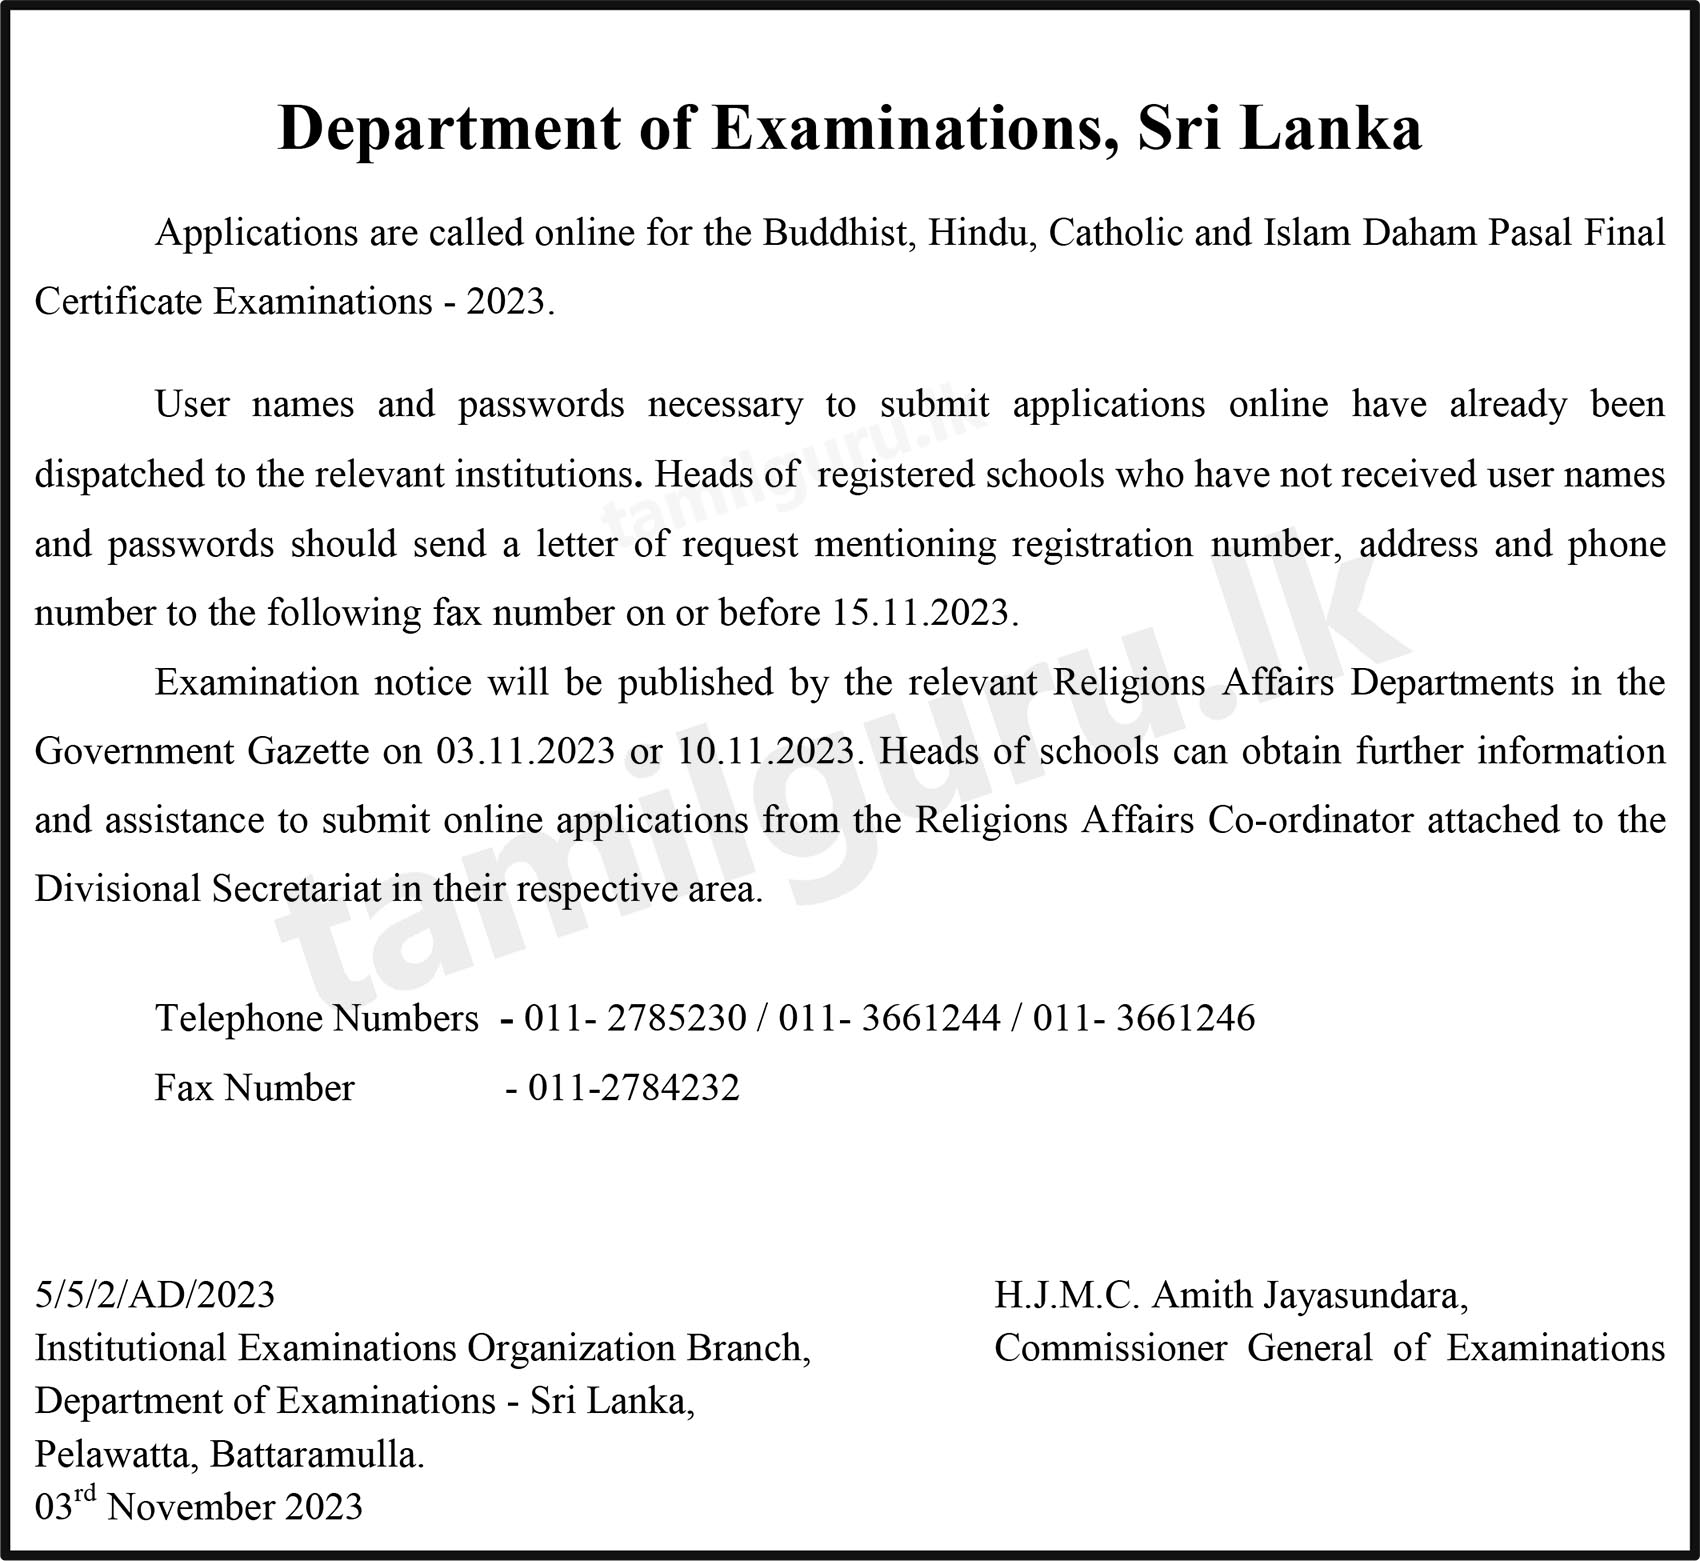 Daham Pasal Final Certificate Examinations Application - 2023 (Buddhist, Hindu, Catholic, Islam)